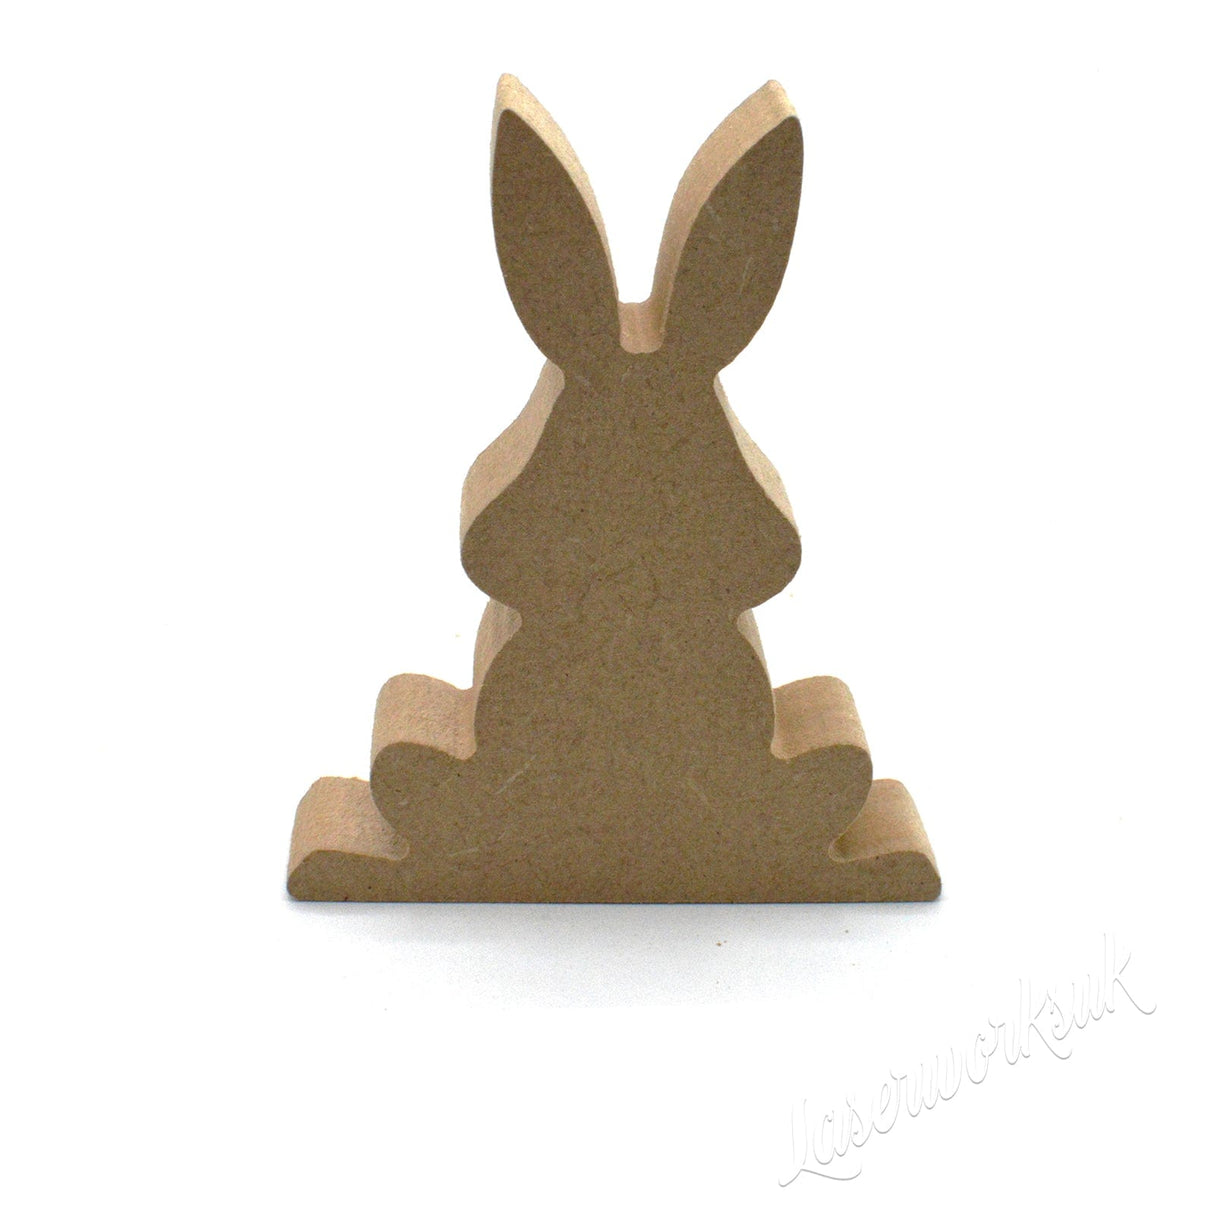 Freestanding Sitting Rabbit Wooden Craft Shapes - Laserworksuk